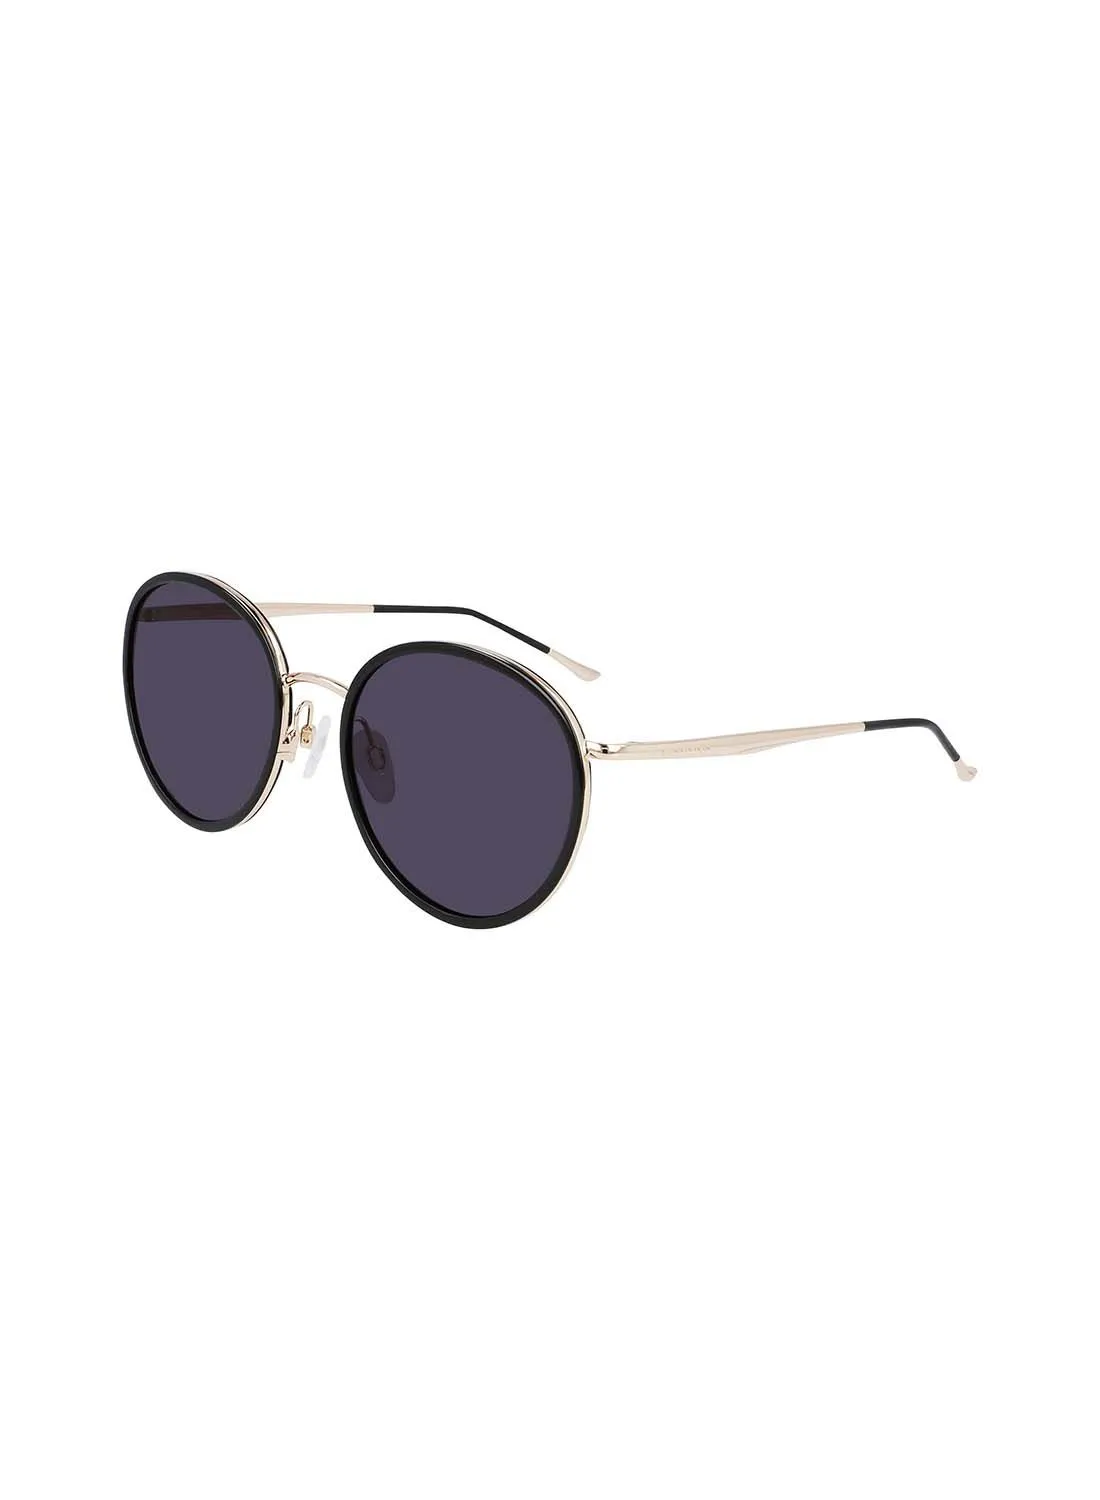 Donna Karan Full Rim Acetate Round Sunglasses DO700S 5420 (001)